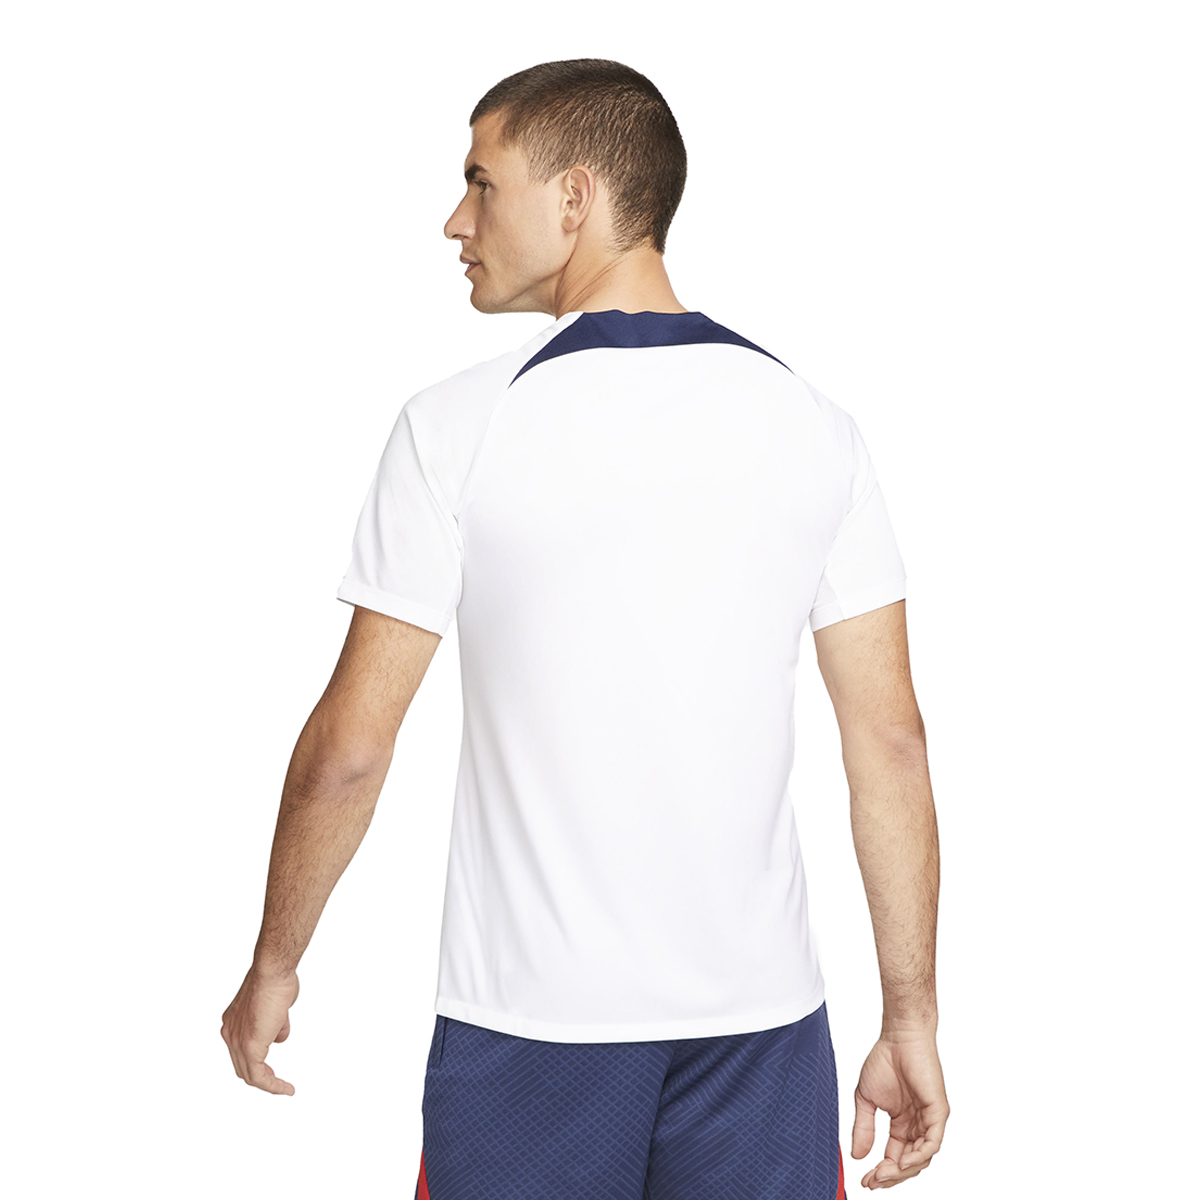 Camiseta Nike Paris Saint-Germain Strike,  image number null